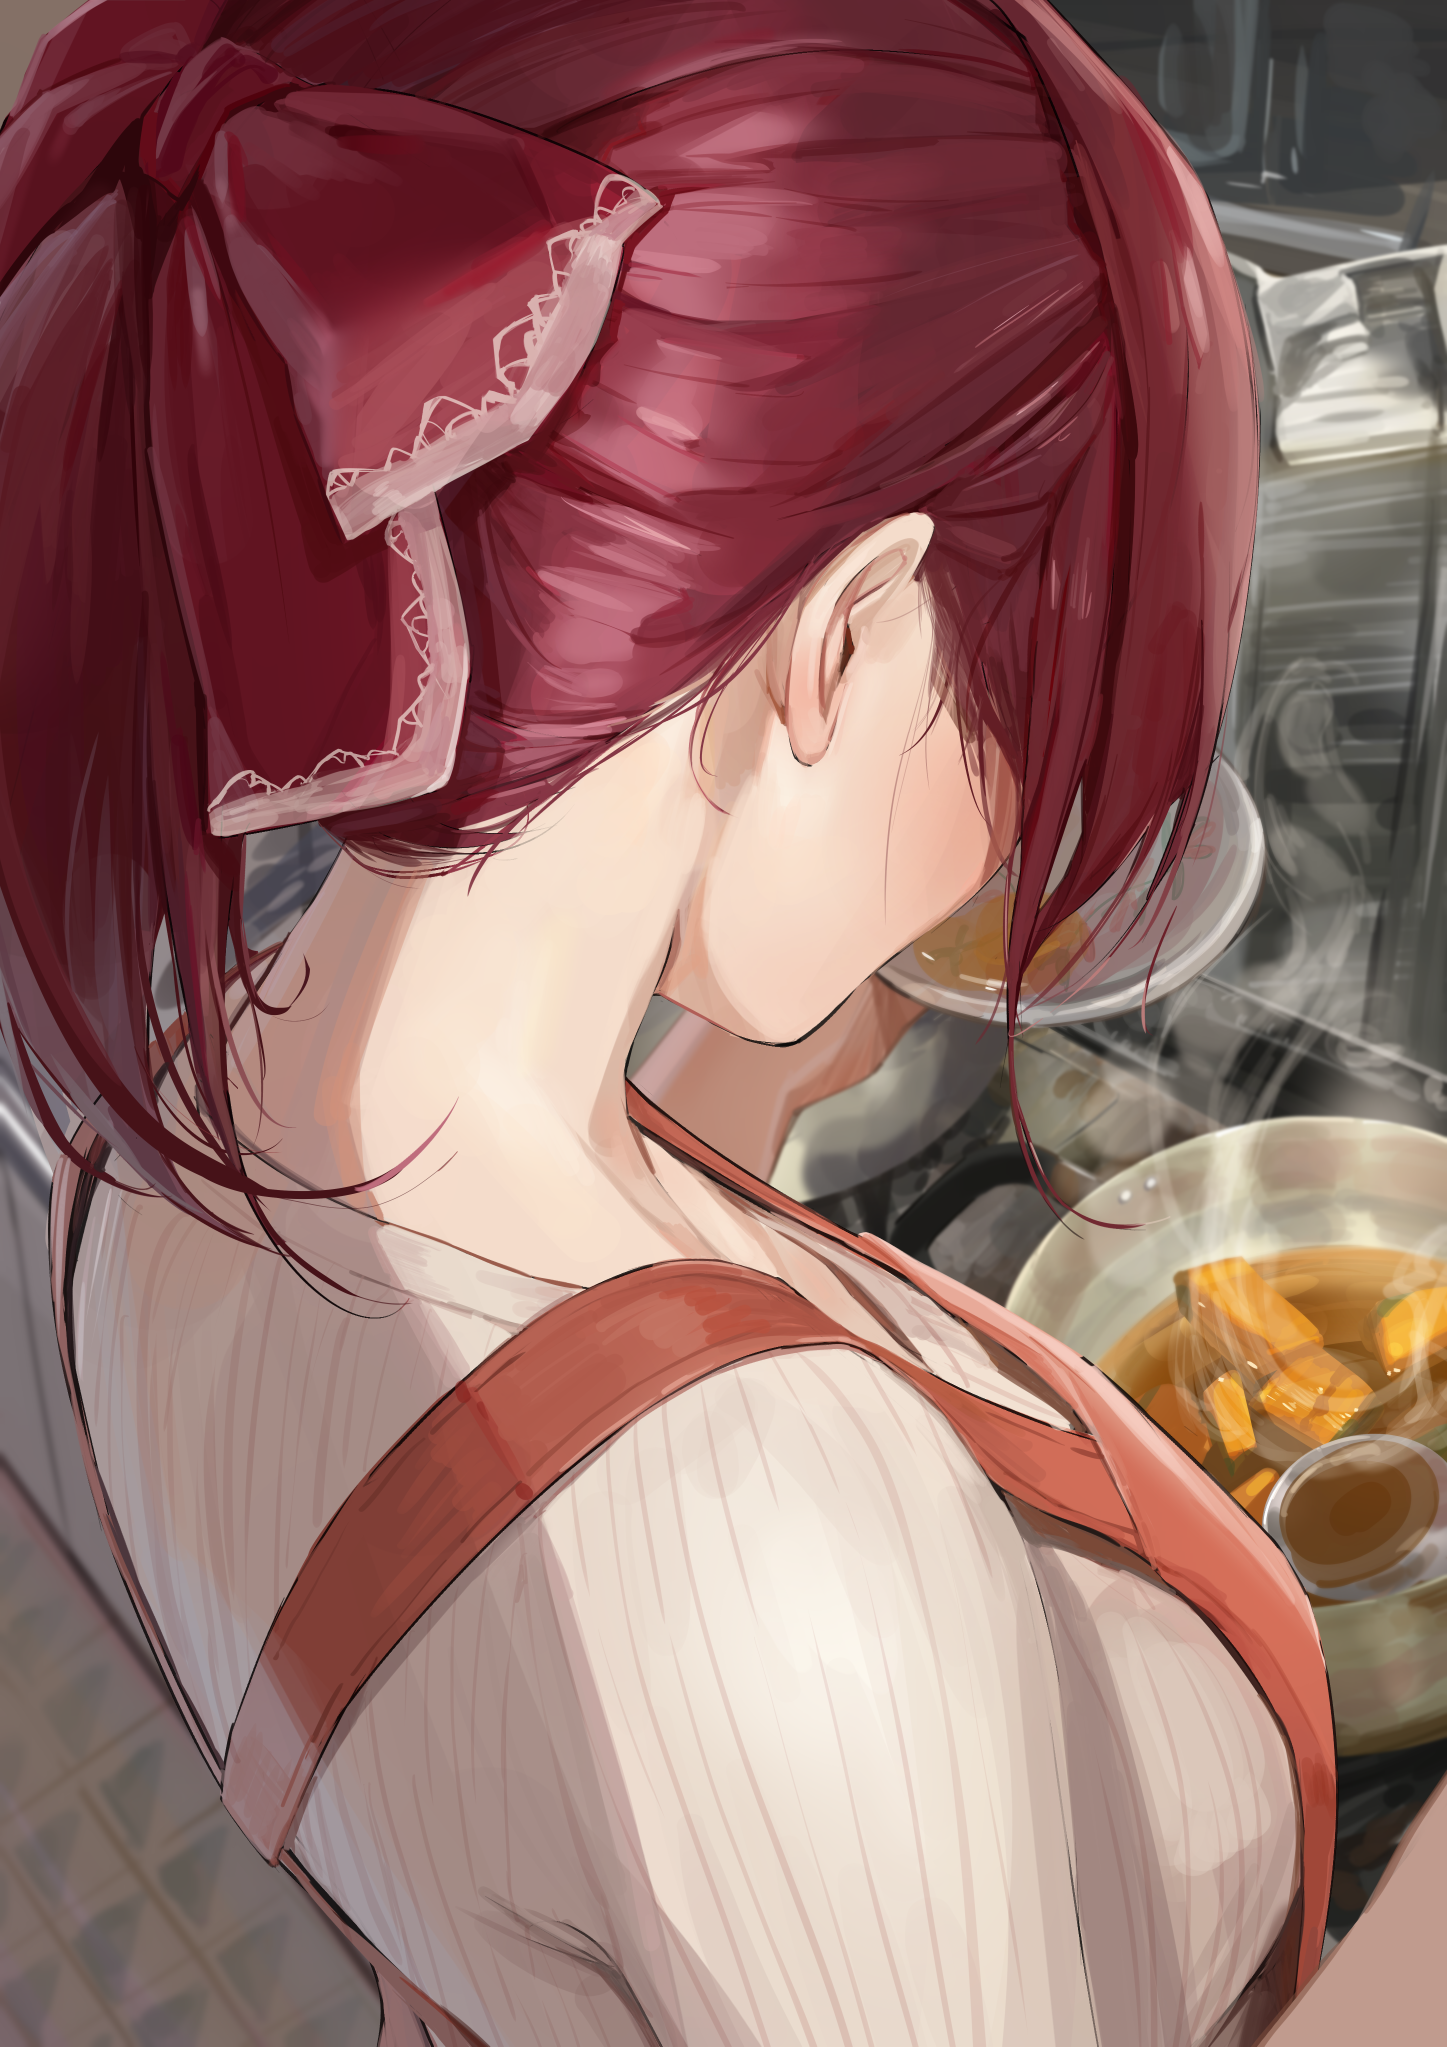 Anime 1447x2047 anime anime girls Musunde Hiraite Hololive Houshou Marine cooking redhead high angle